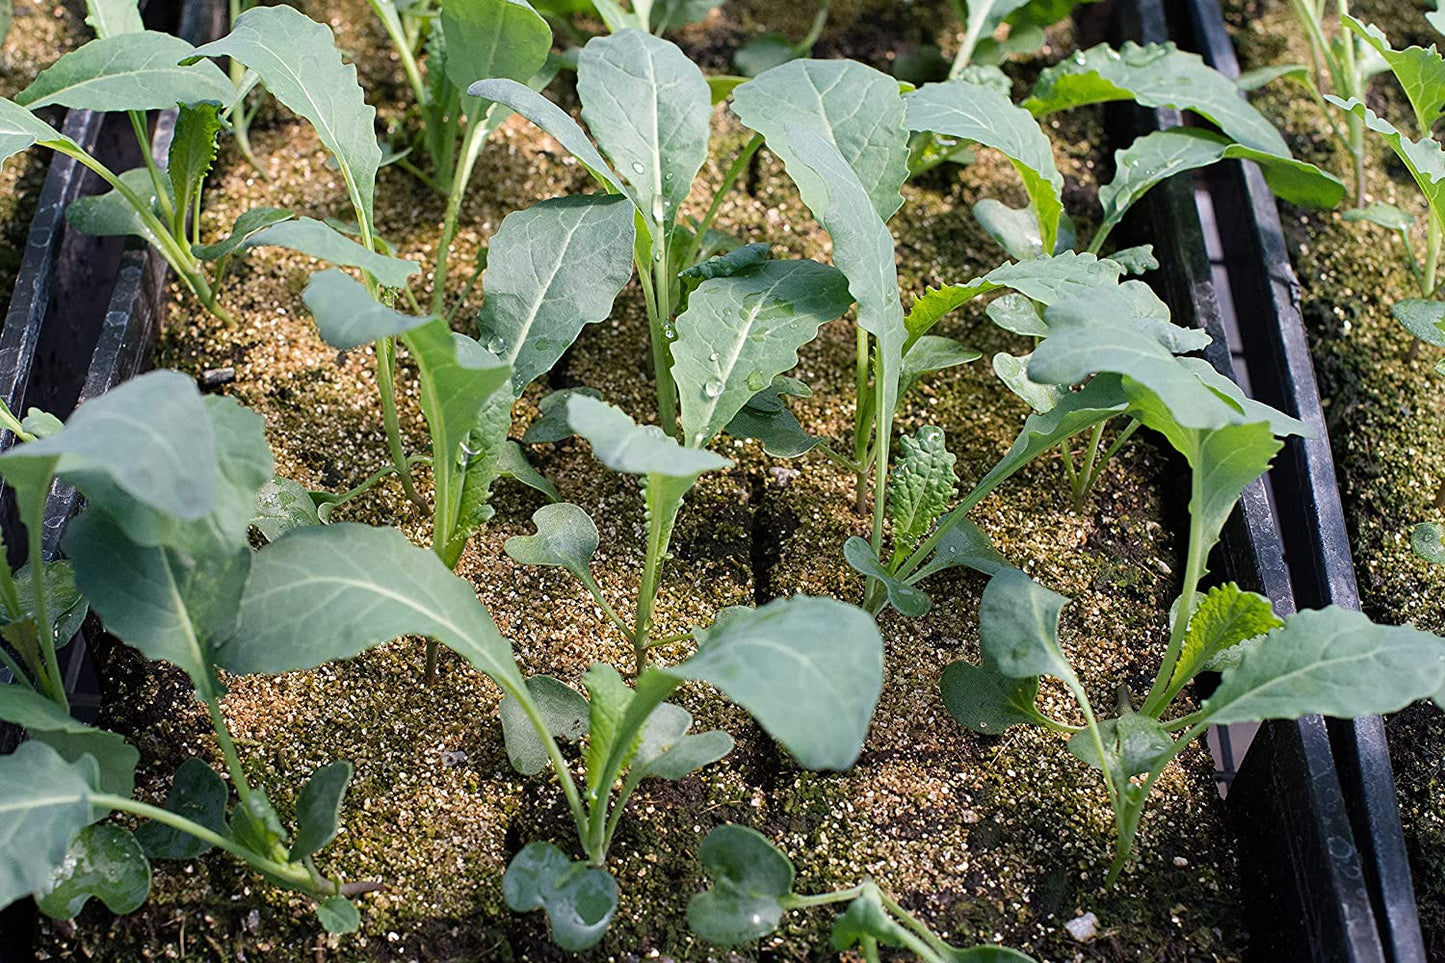 Hundredfold Tuscan Black Kale 500 Seeds - Lacinato, Nero di Tuscana Dinosaur, Italian Heirloom Non-GMO Vegetable